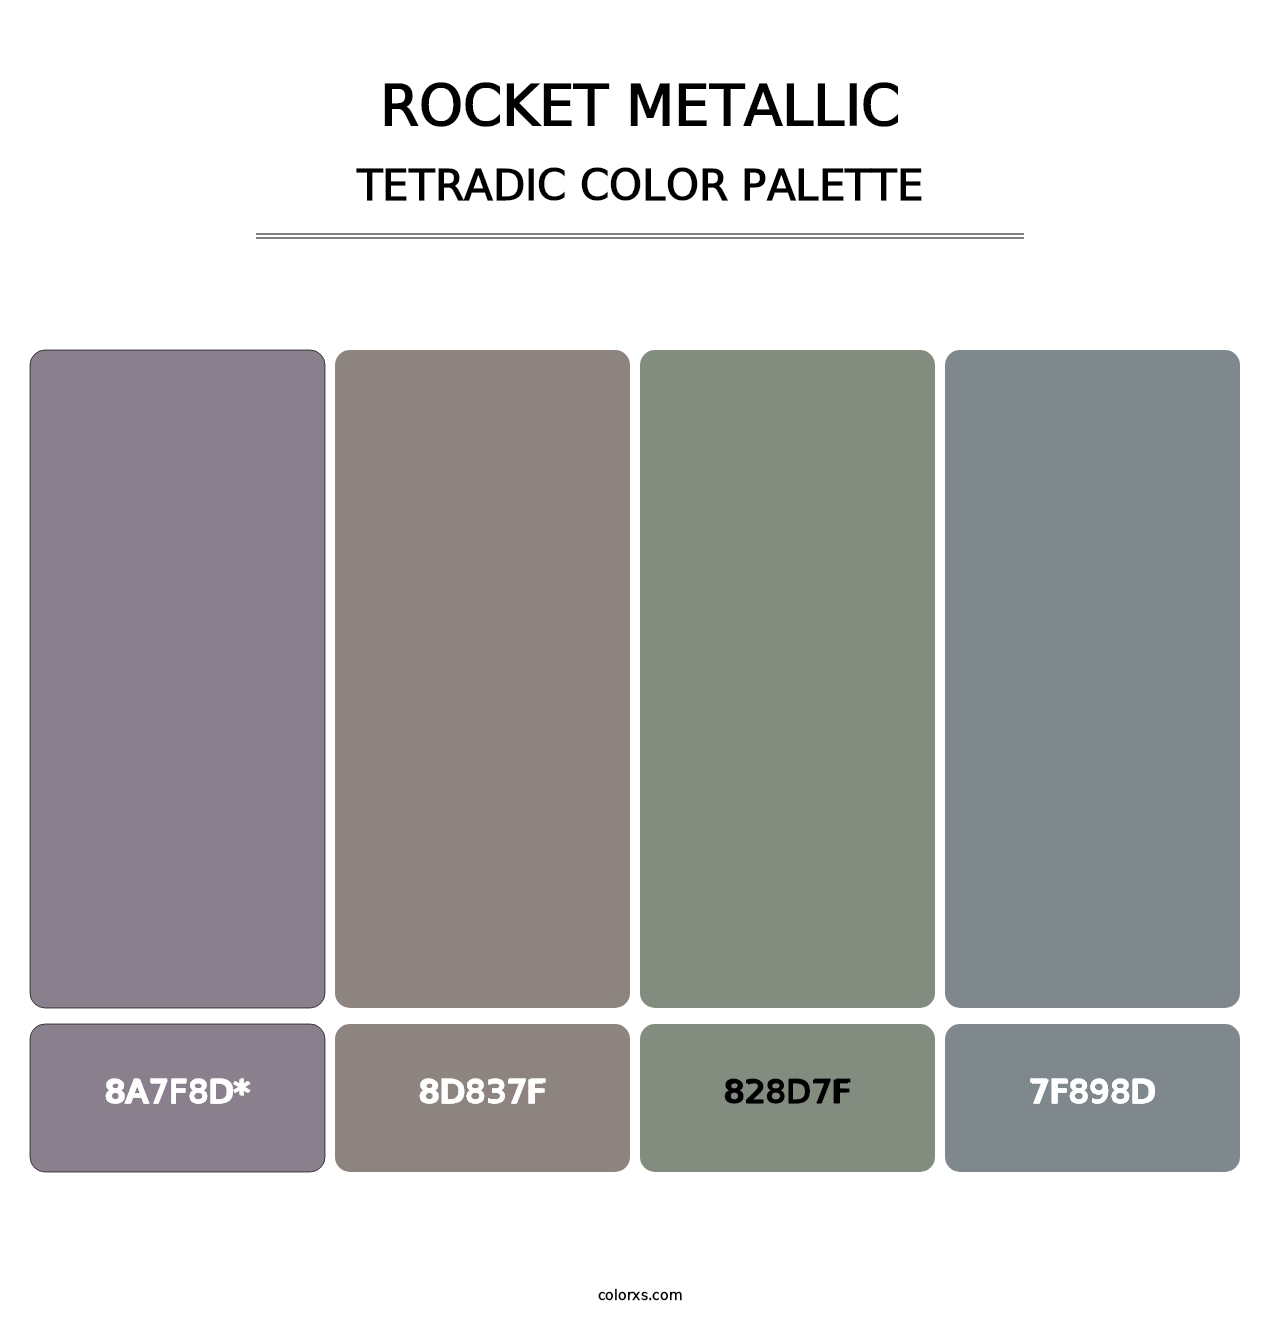 Rocket Metallic - Tetradic Color Palette